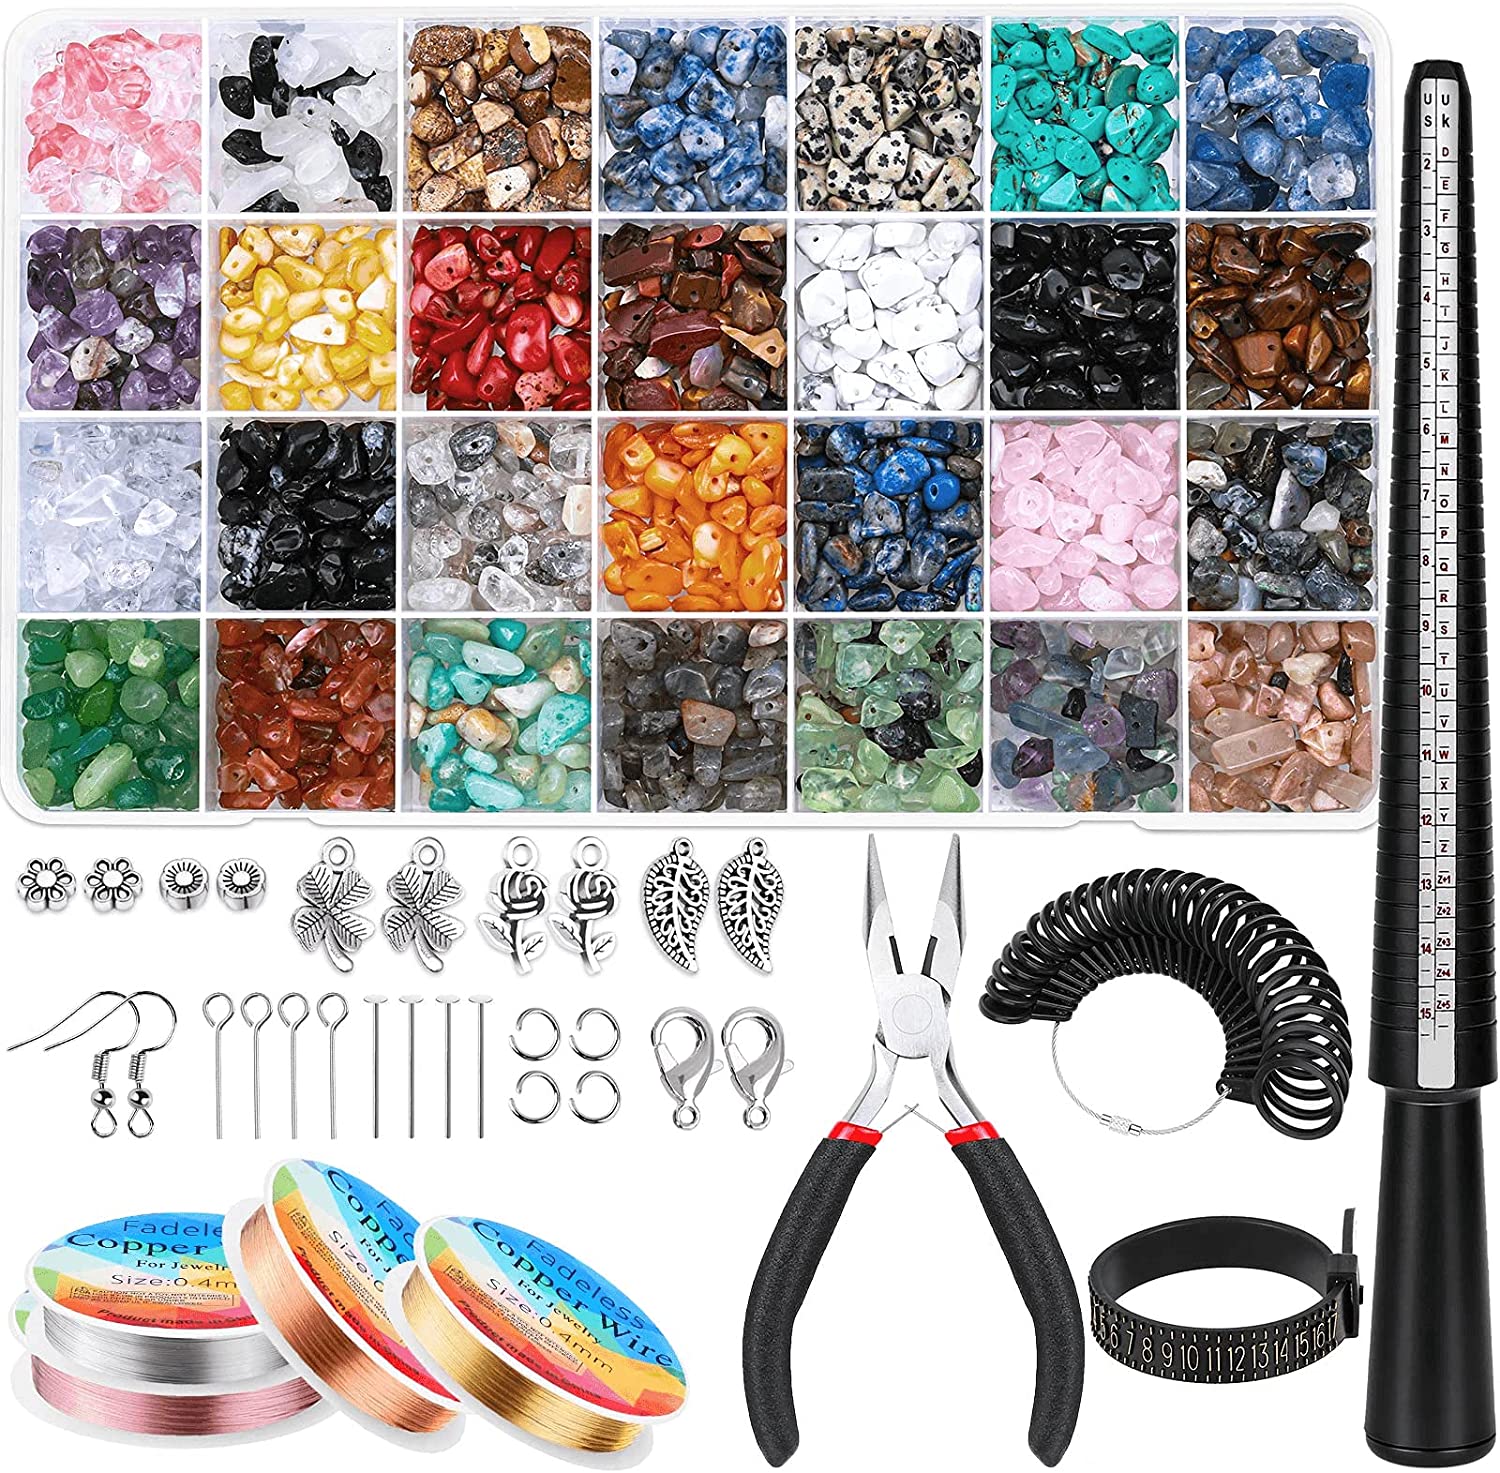 Ring Making Kit, 1718Pcs Jewelry Making Kit with 28 Colors Crystal Gemstone  Chip Beads, Ring Sizer Tools, Jewelry Wire, Jewelry Pliers and Other Jewelry  Ring Making Supplies